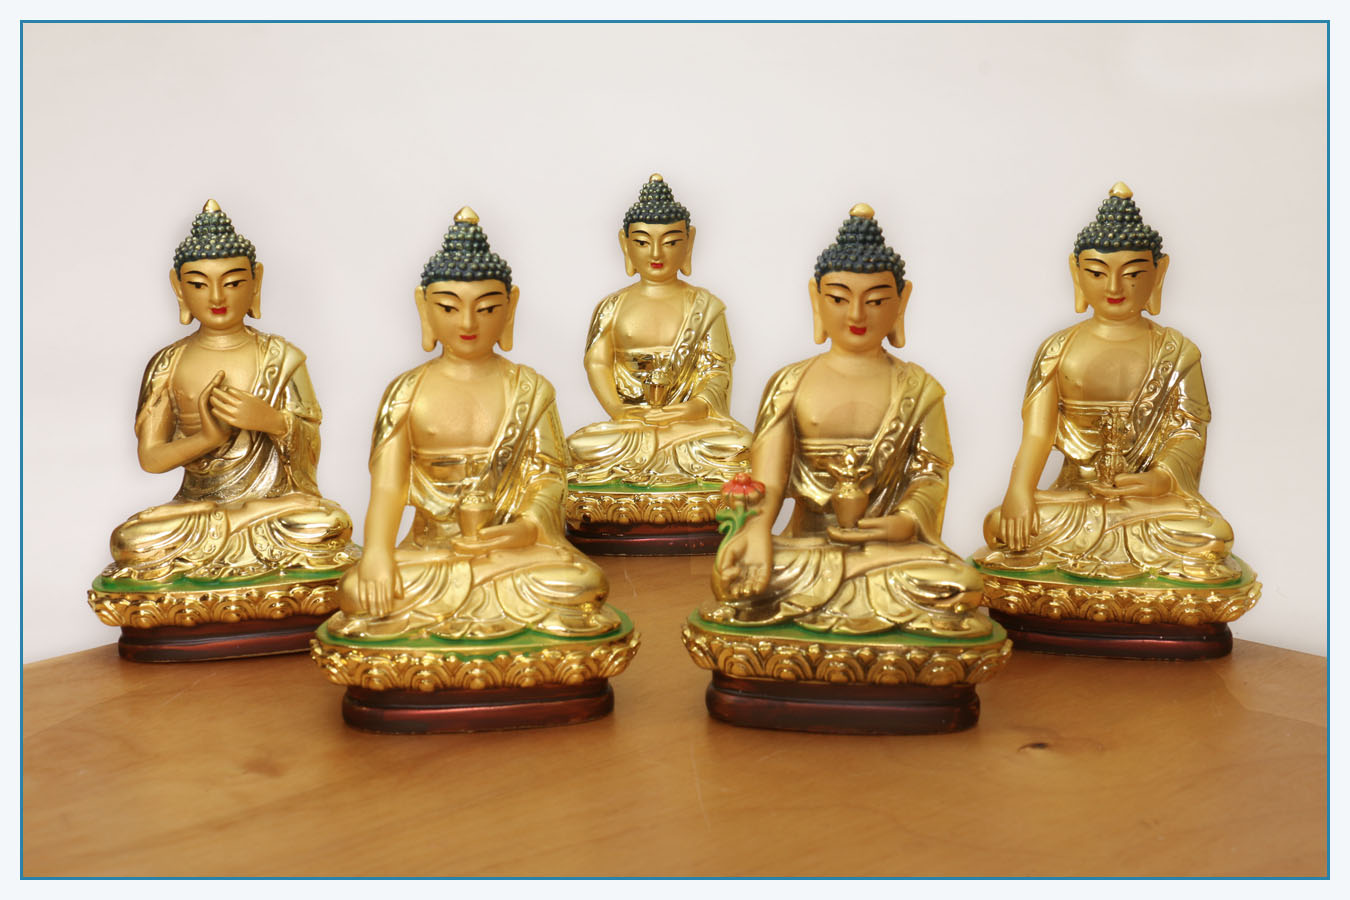 Set of 5 Traditional Tibetan Style Dhyani Buddha Statues.